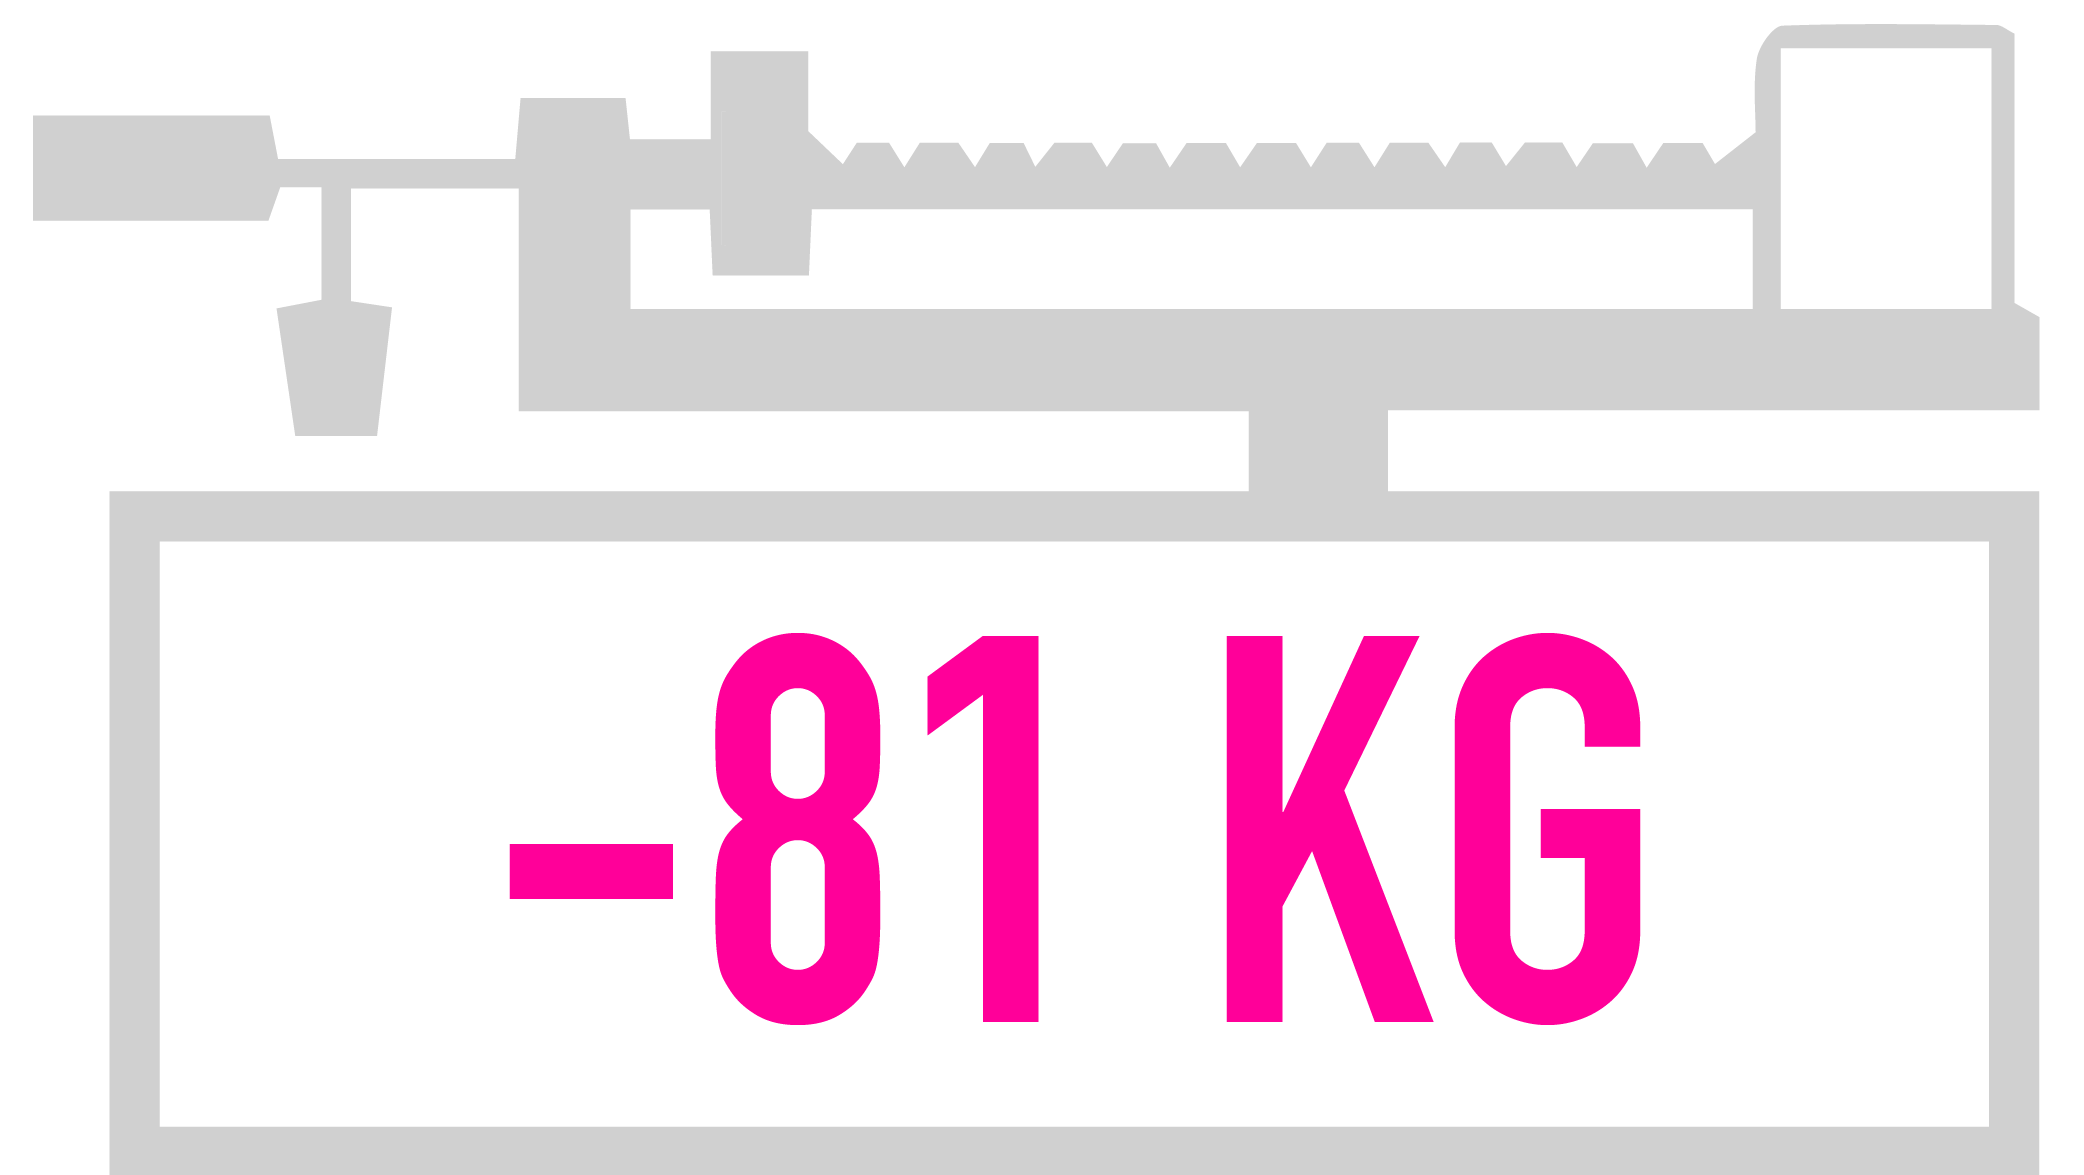  81kg 01